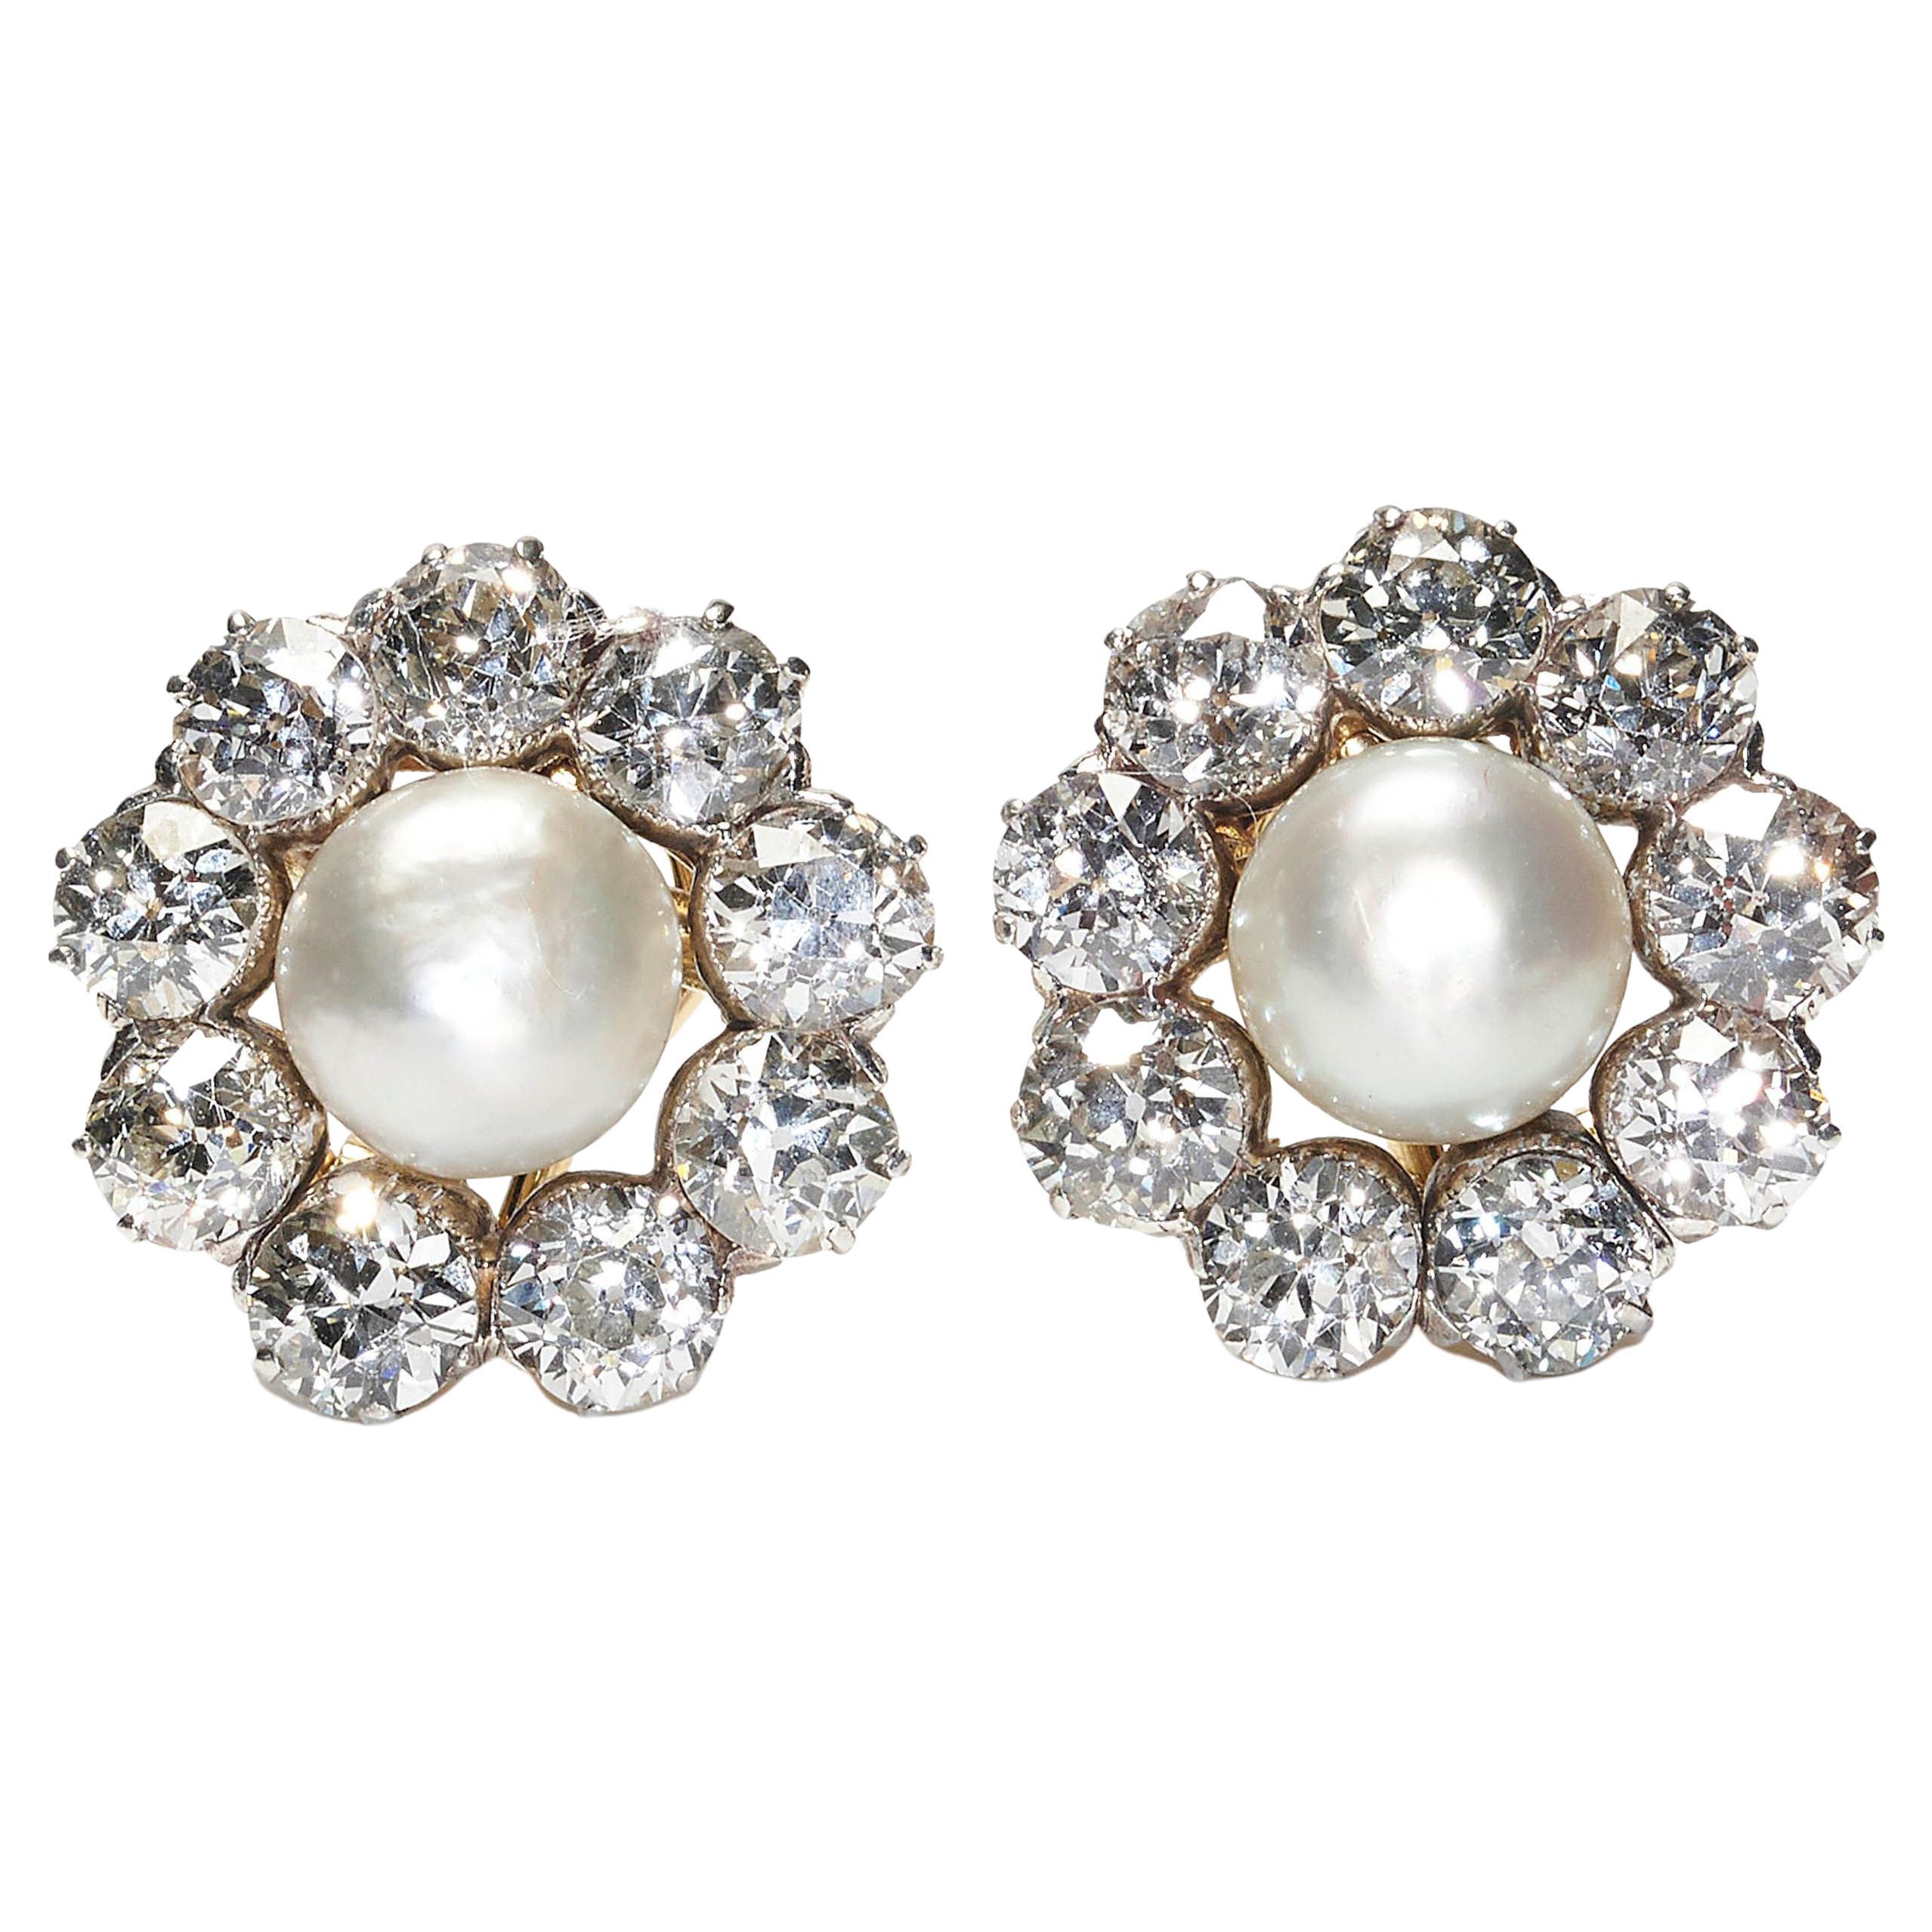 Fellala Pearl Earrings Vintage Gold Plated White Flower Stud Earrings for Wedding